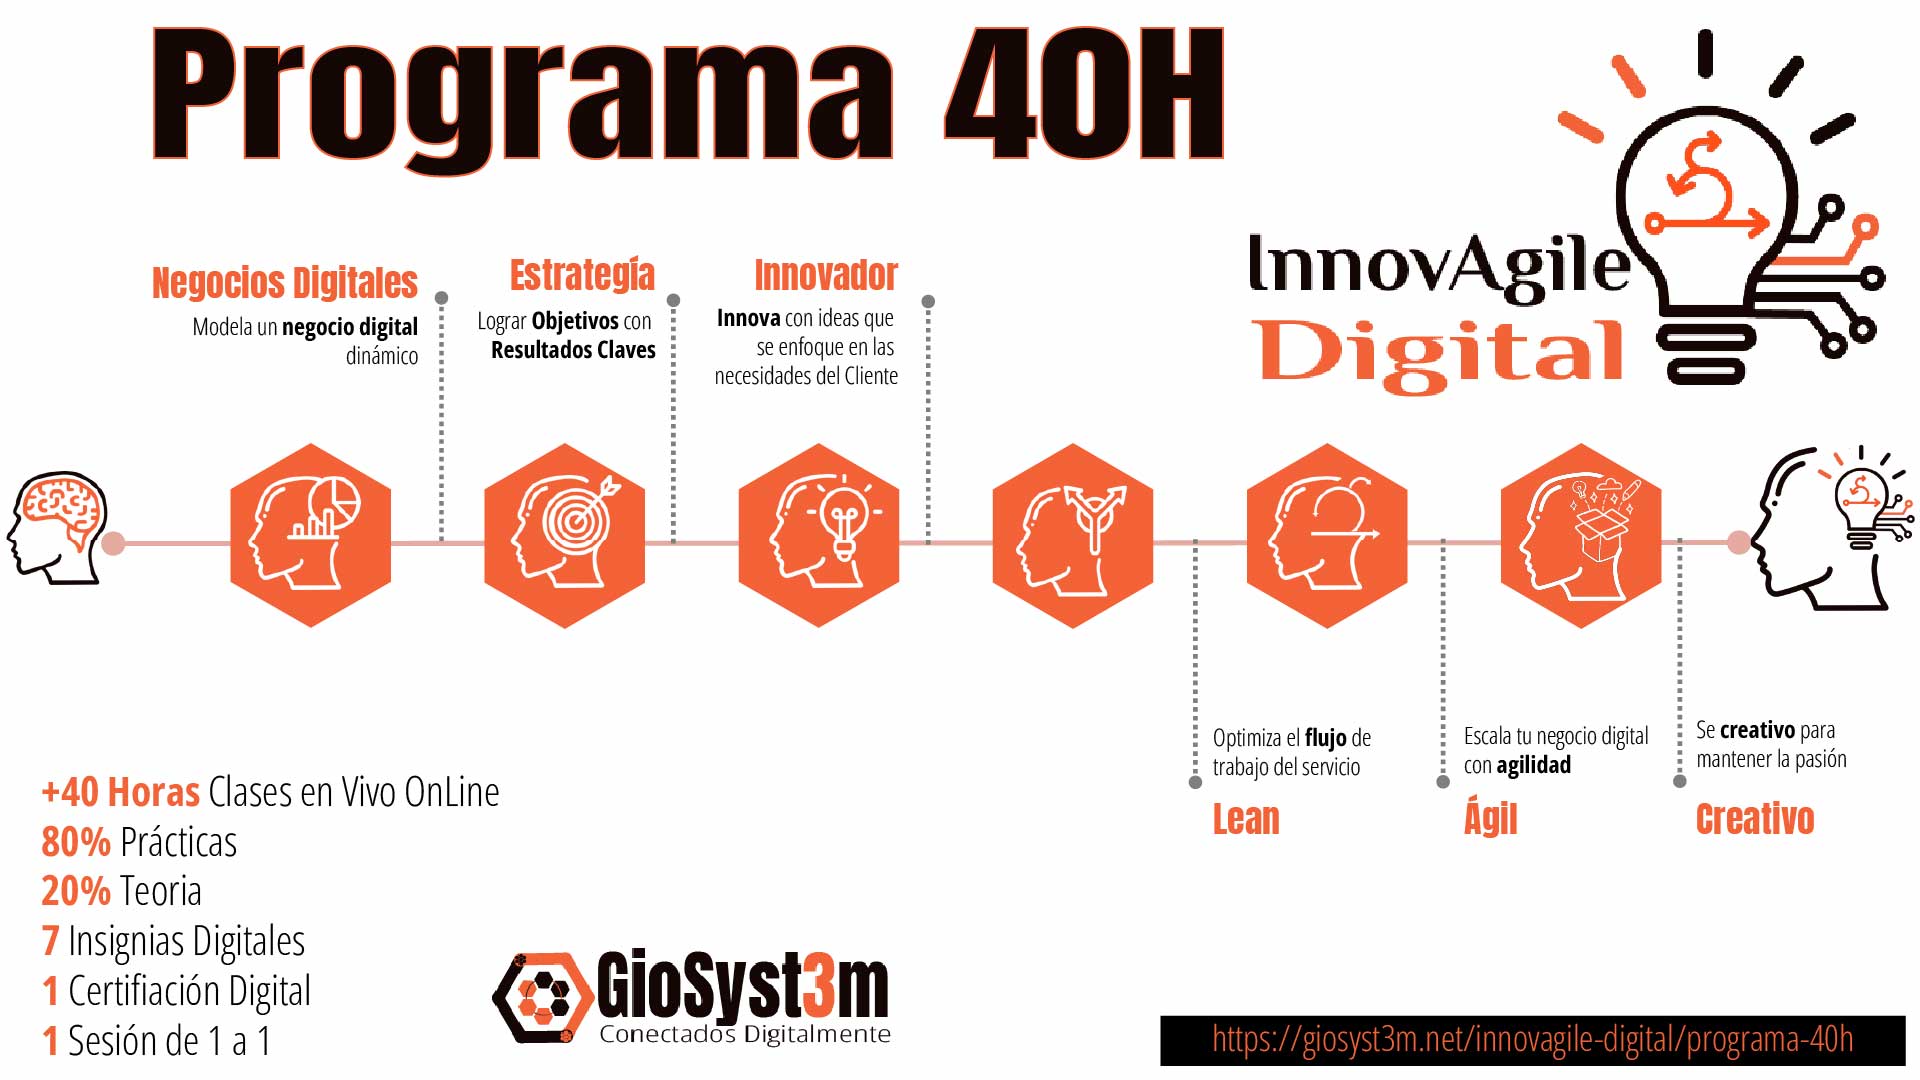 Programa 40H de InnovAgile Digital - GioSyst3m